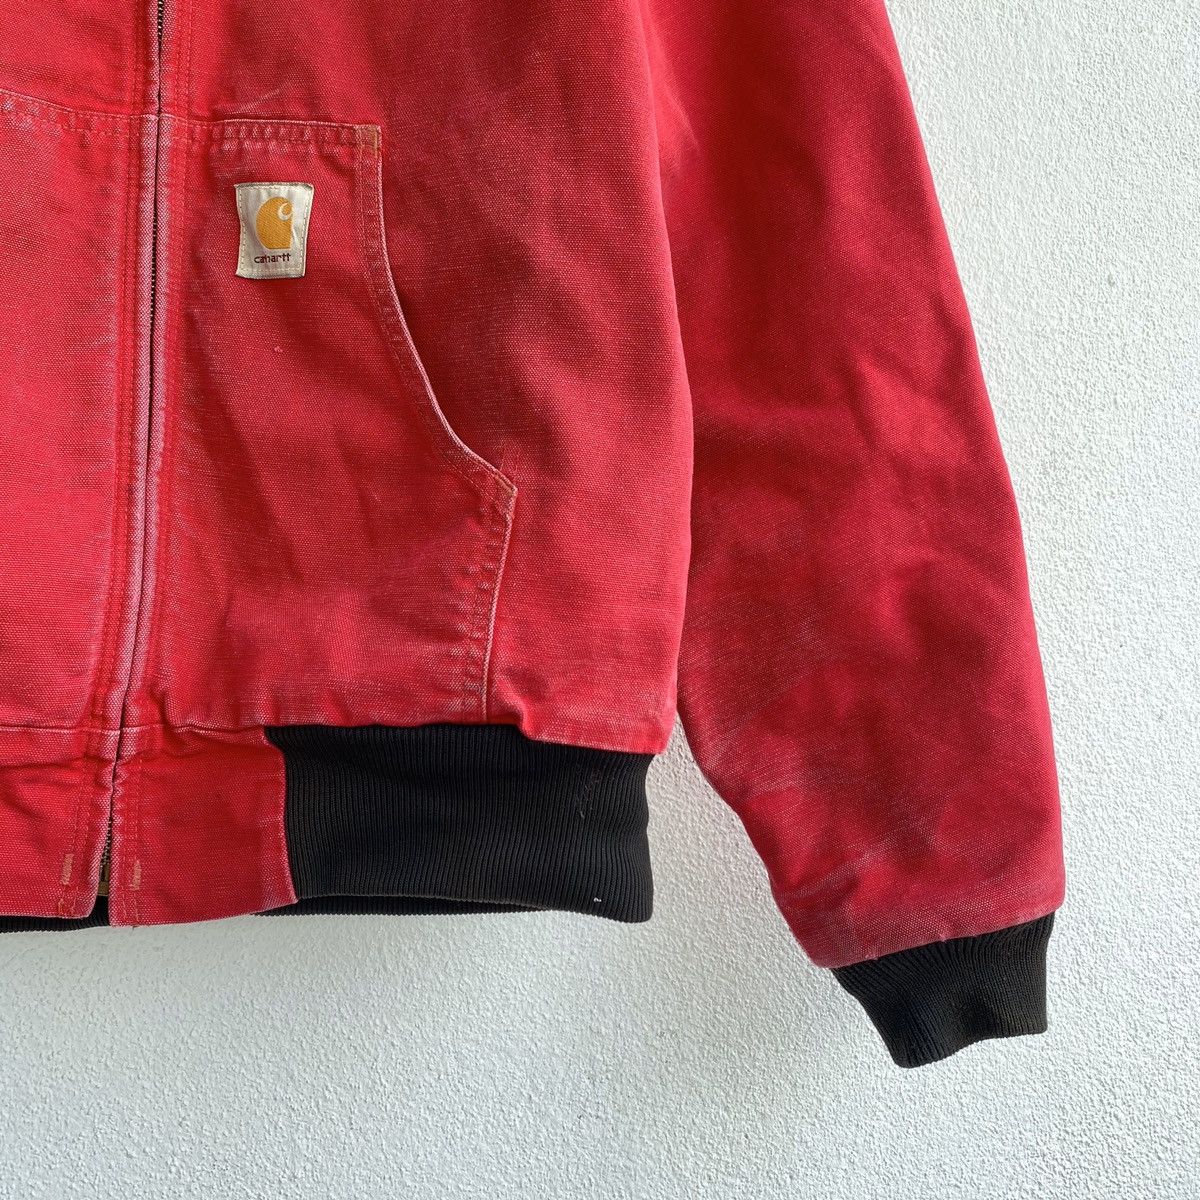 Carhartt Carhartt Hooded Zip Red Jacket Size US M / EU 48-50 / 2 - 4 Thumbnail